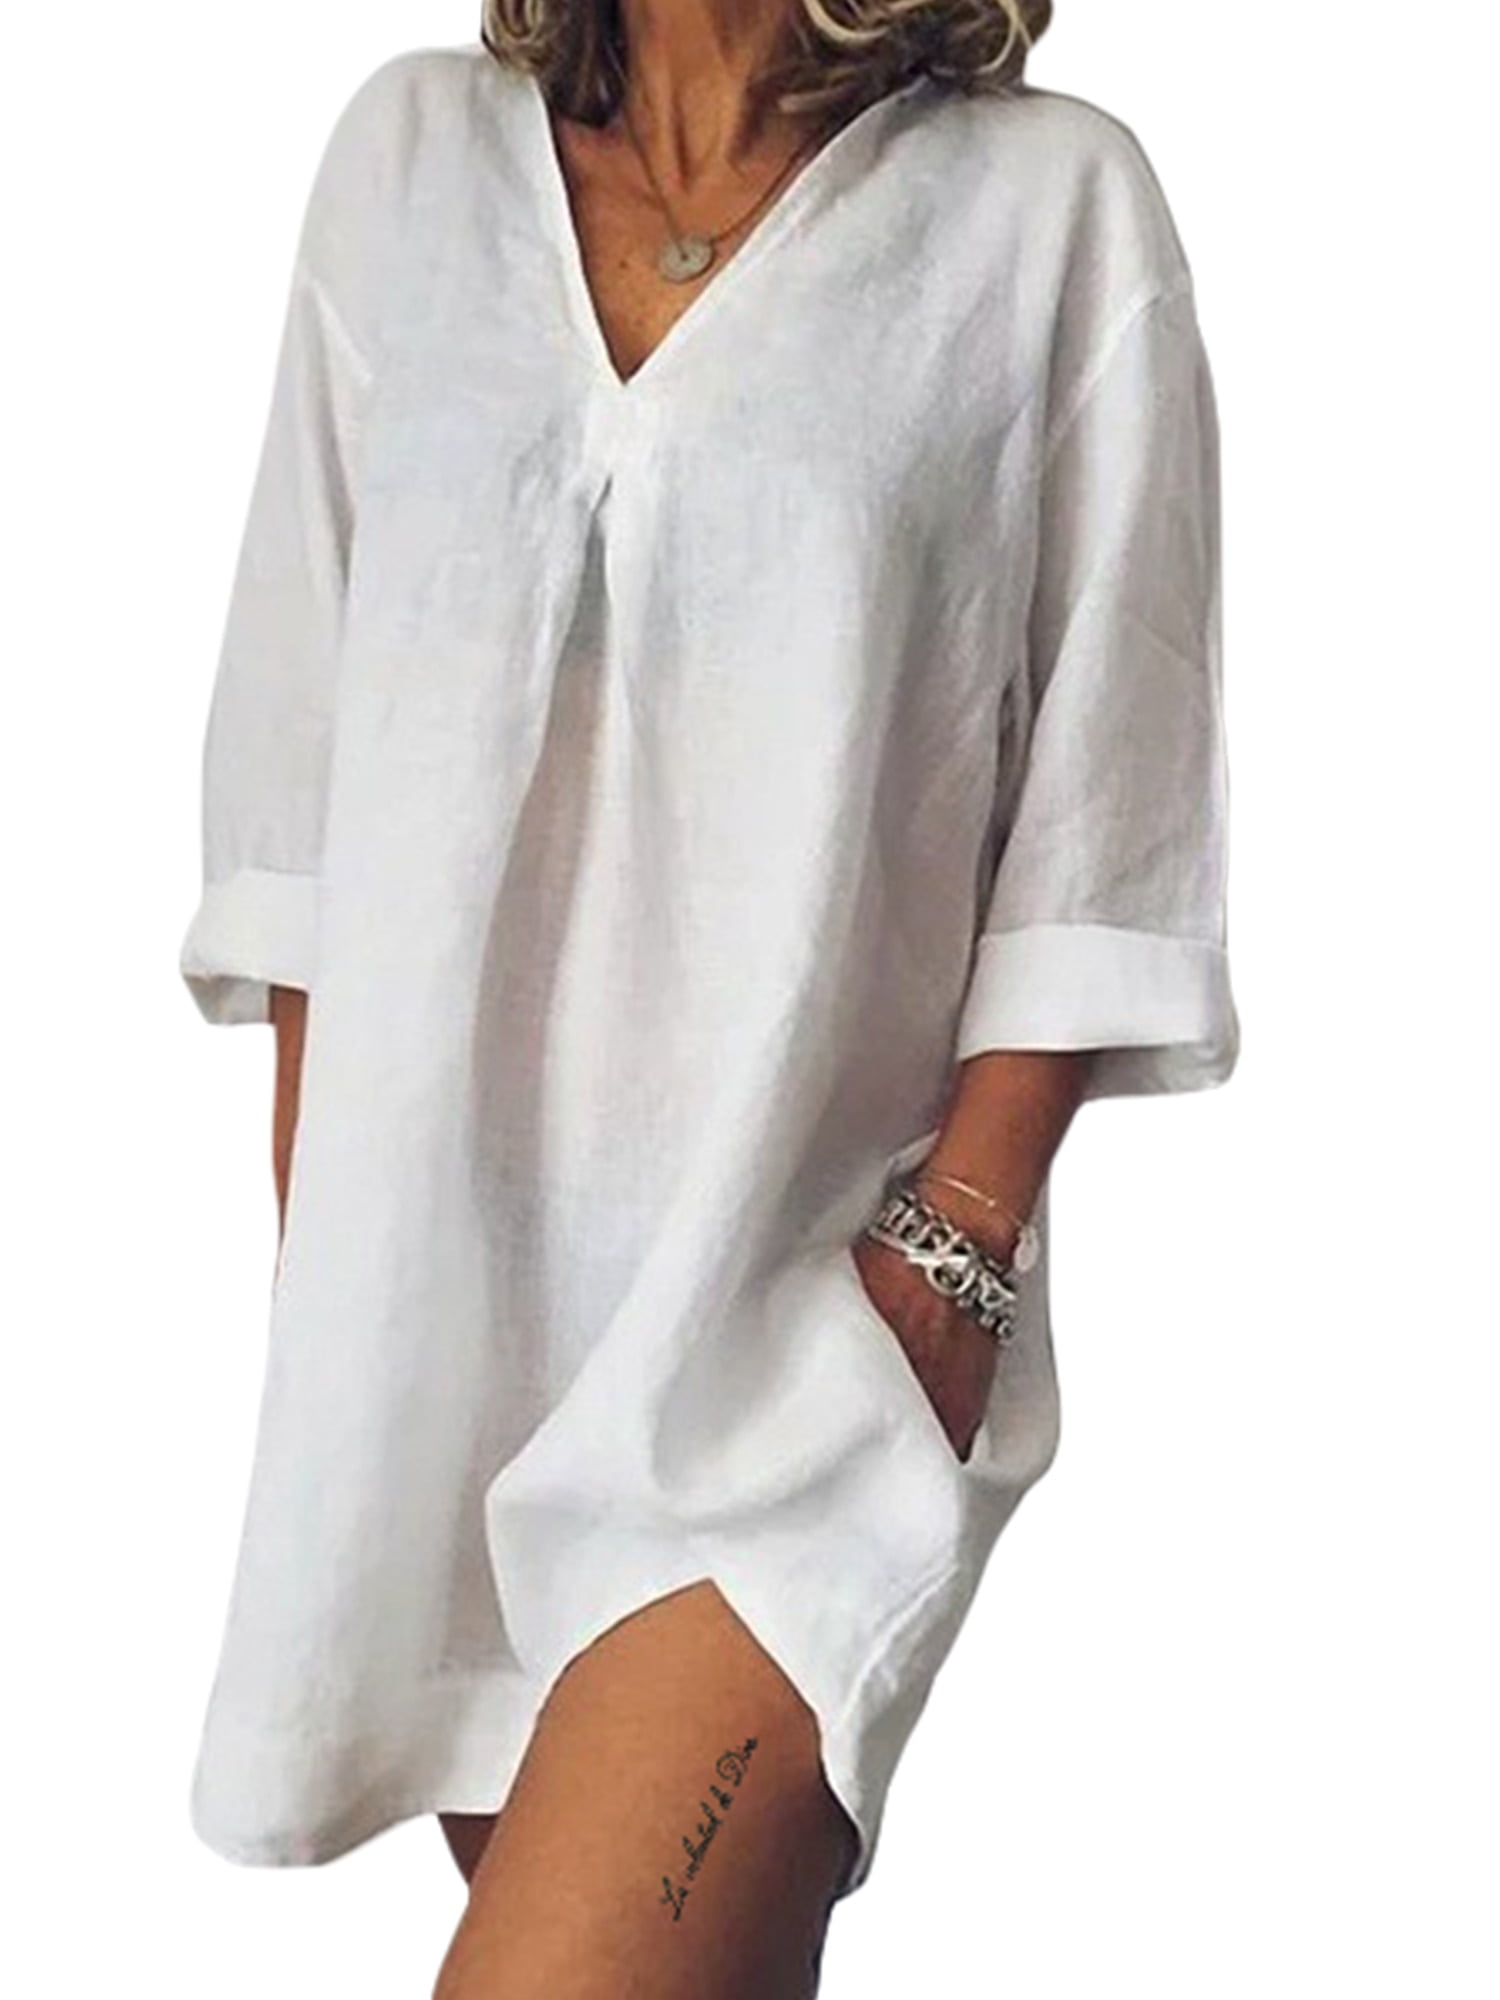 Linen top Woman shirt Linen shirt Linen blouse Linen basic top White linen top Linen summer top Boho blouse White blouse